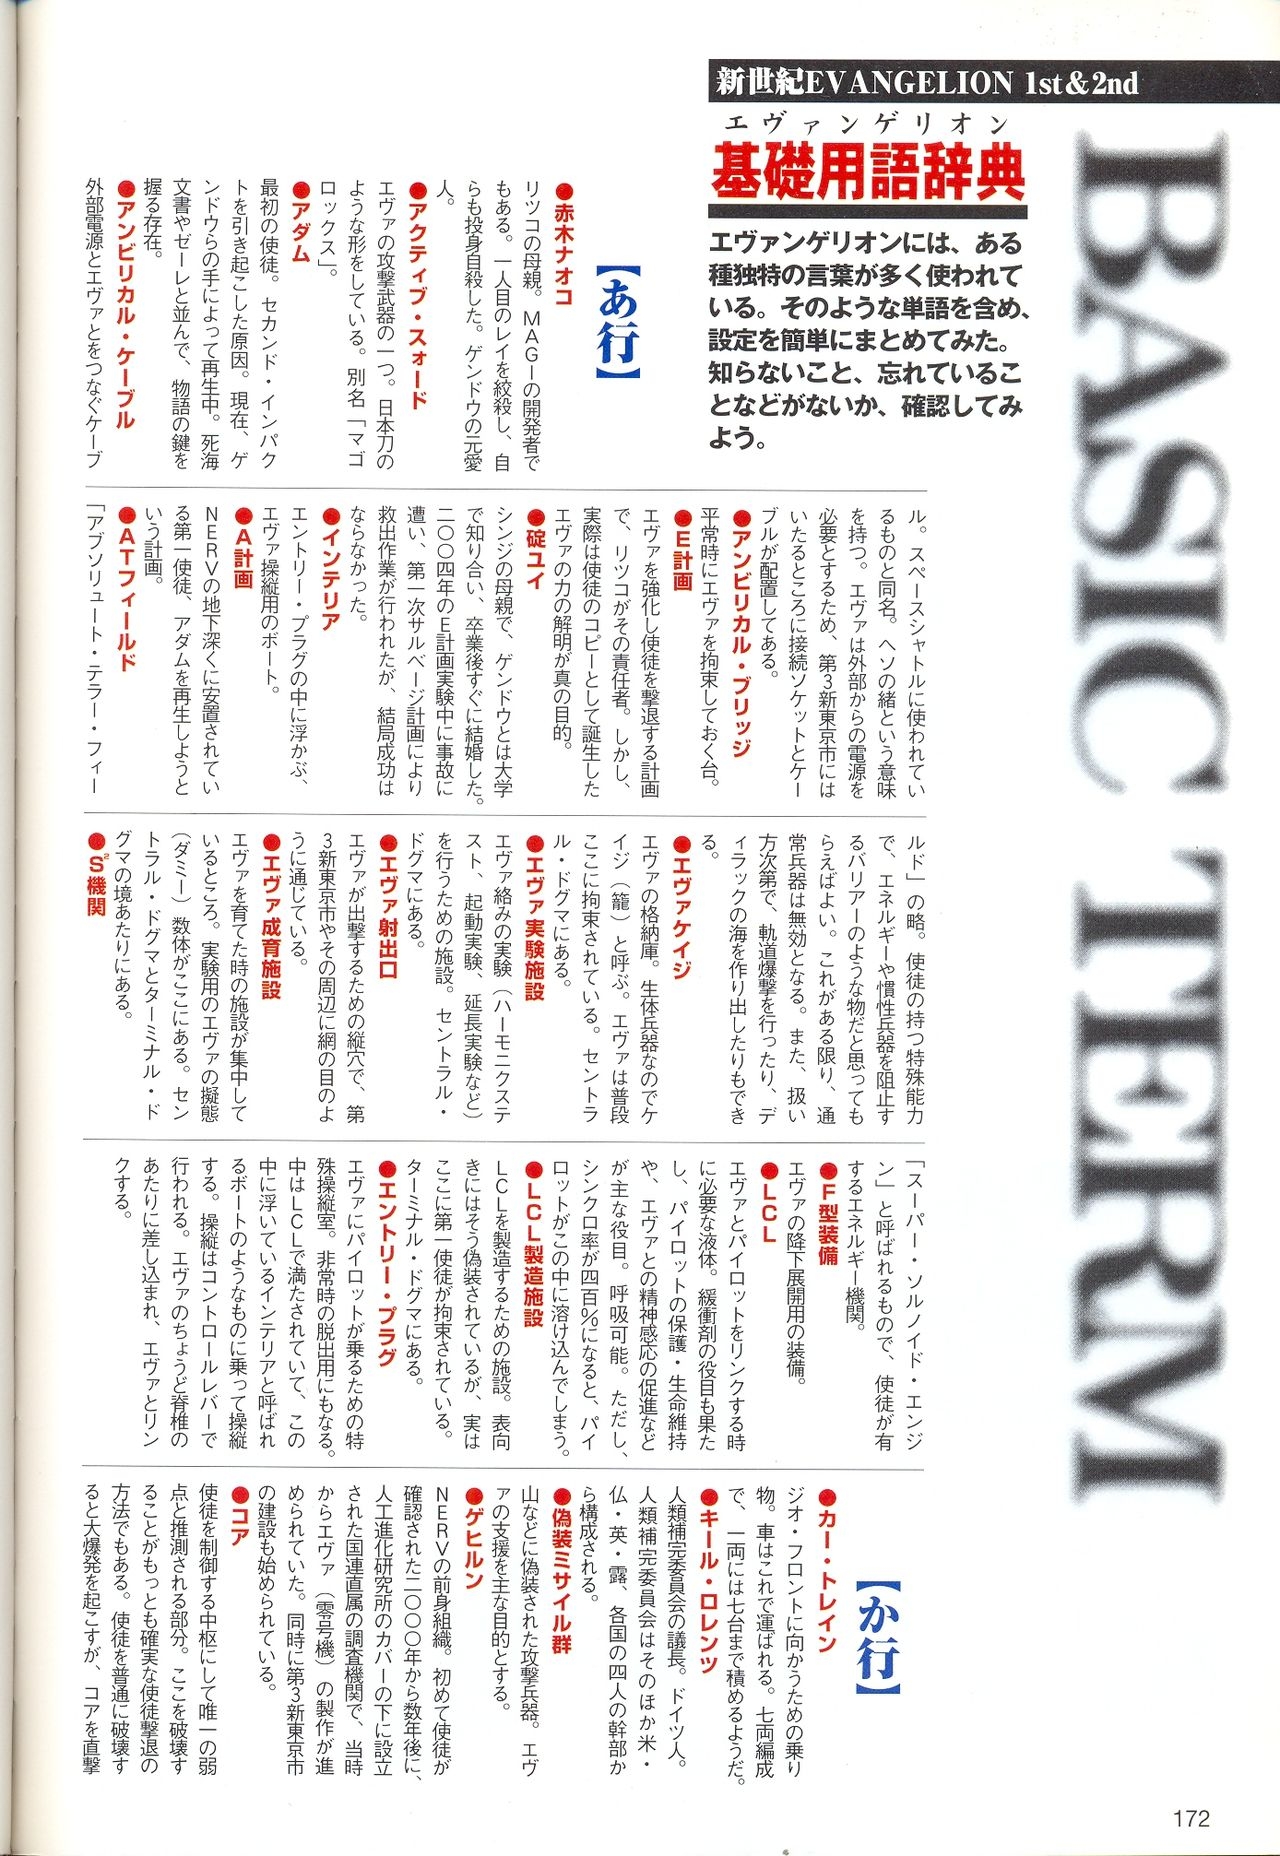 Neon Genesis Evangelion - 2nd Impression Sega Saturn Perfect Guide 171